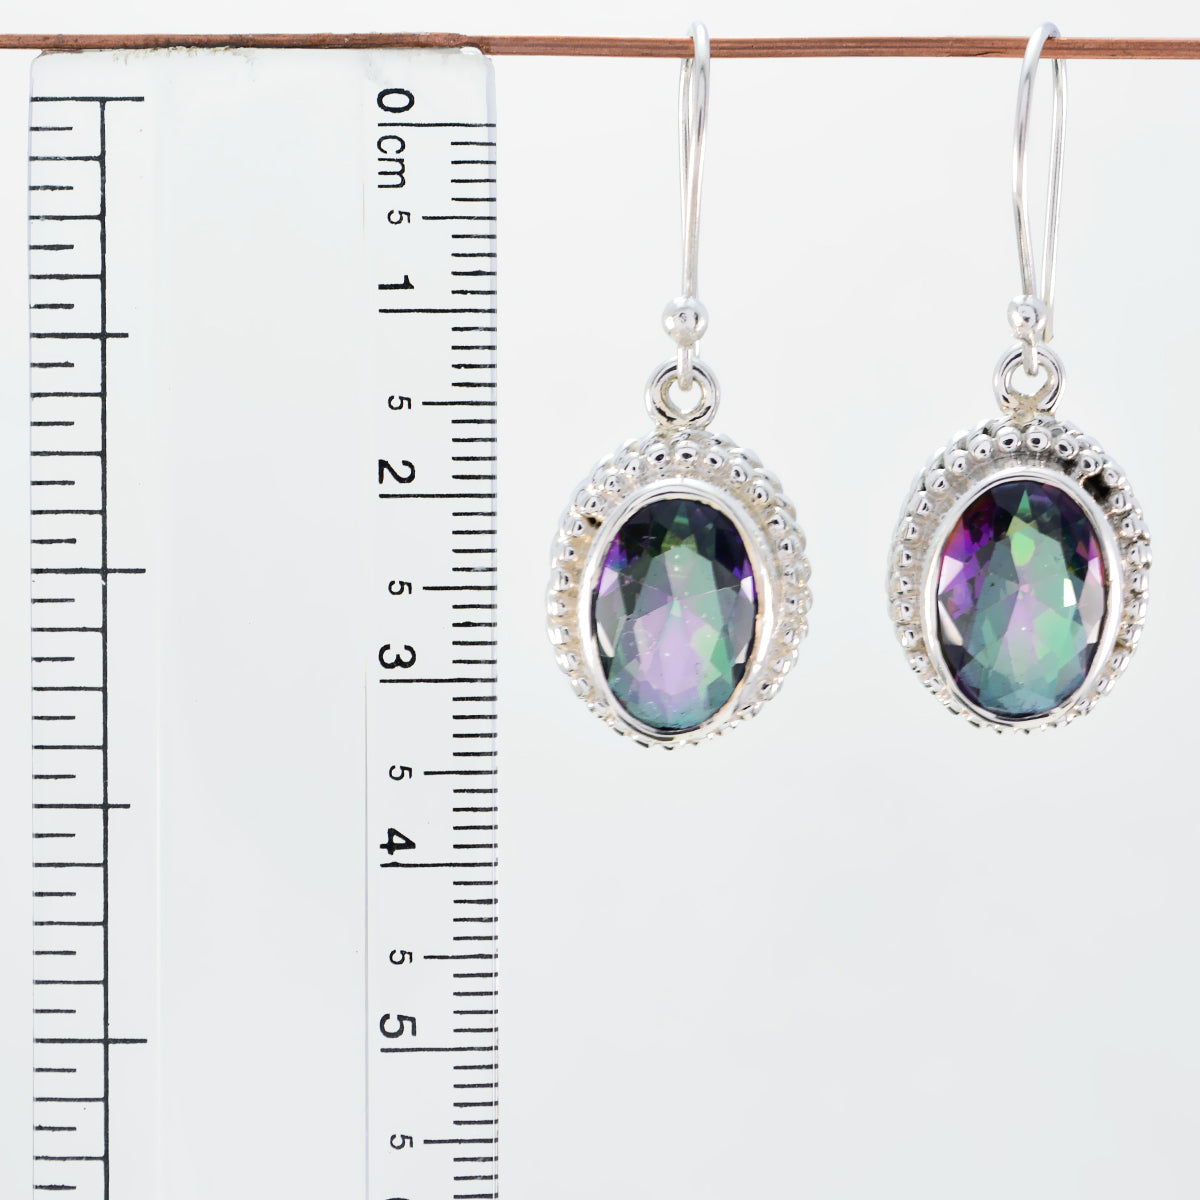 Riyo Good Gemstones round Faceted Multi Mystic Quartz Silver Earring cyber Monday gift